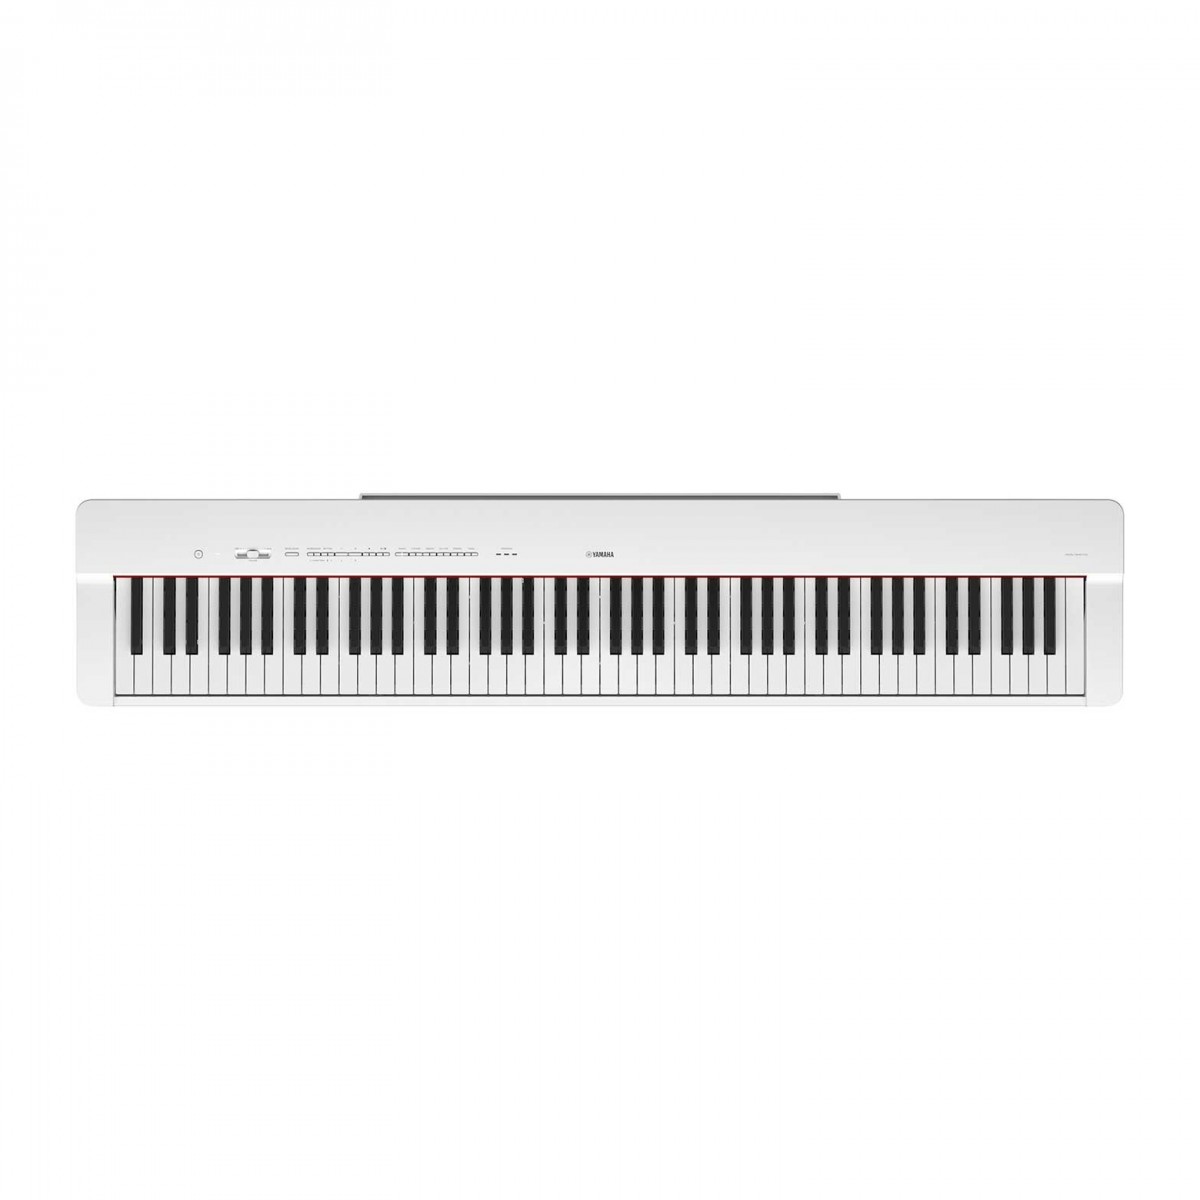 YAMAHA P225W WHITE PIANOFORTE DIGITALE 88 TASTI PESATI COLORE BIANCO 6